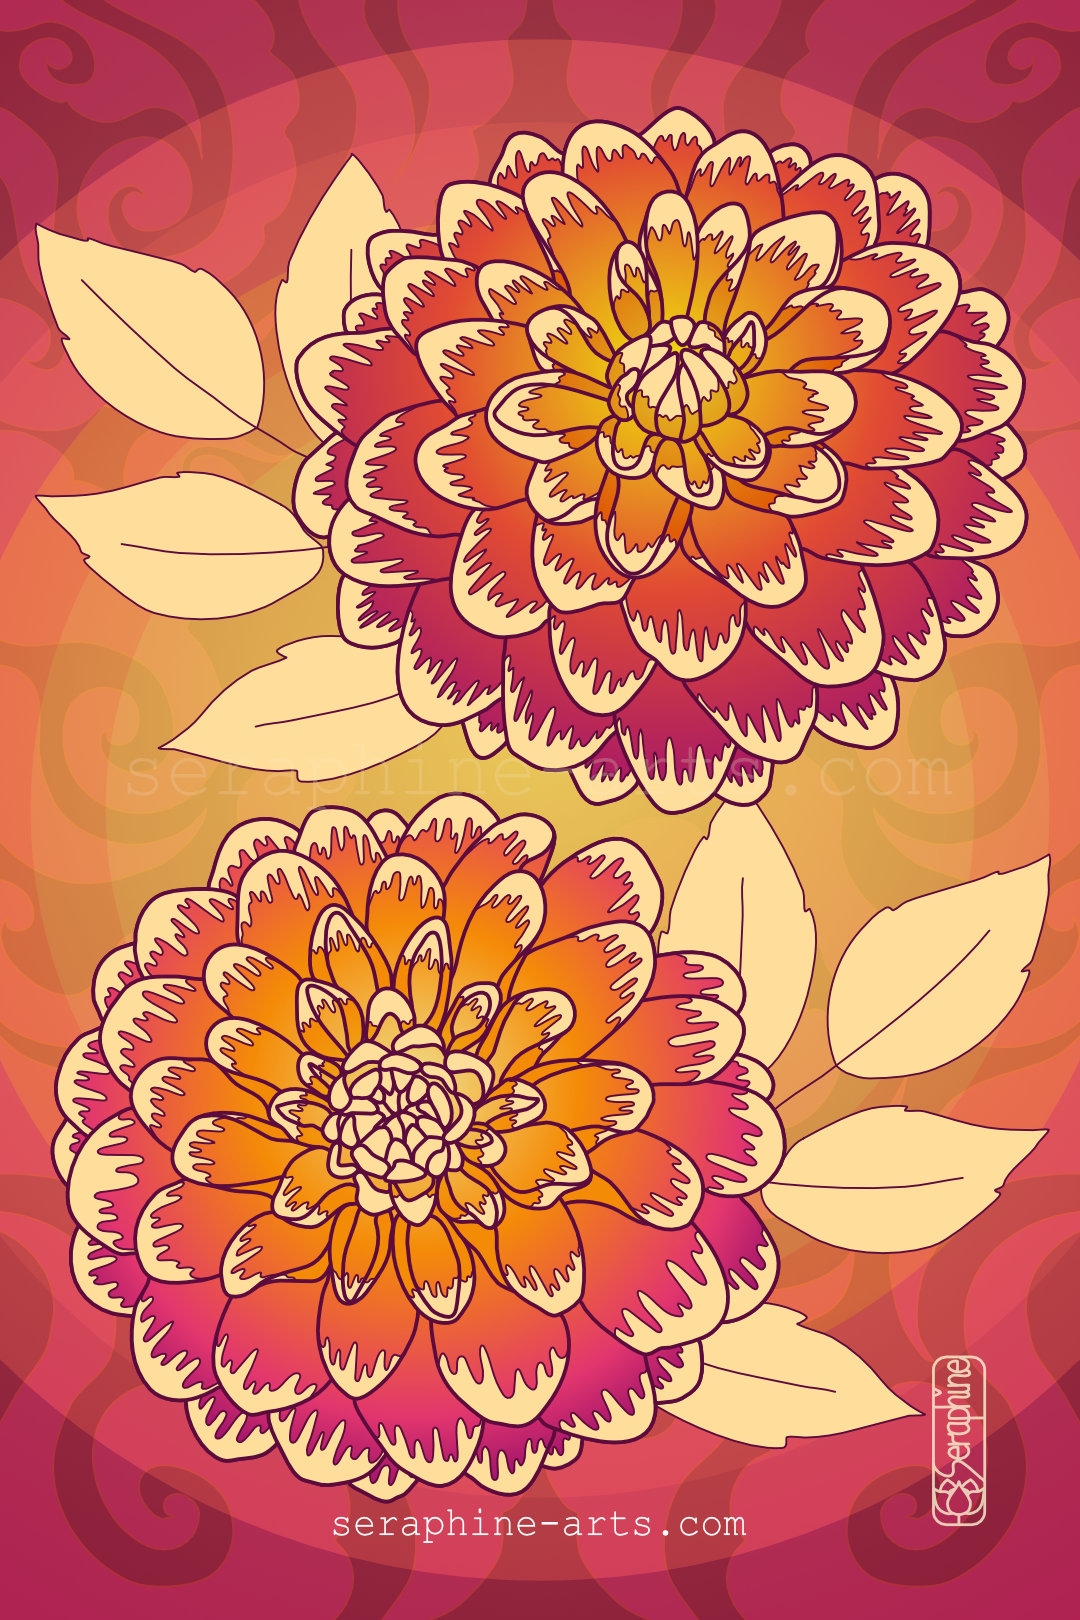 images/dahlia-flowers.jpg